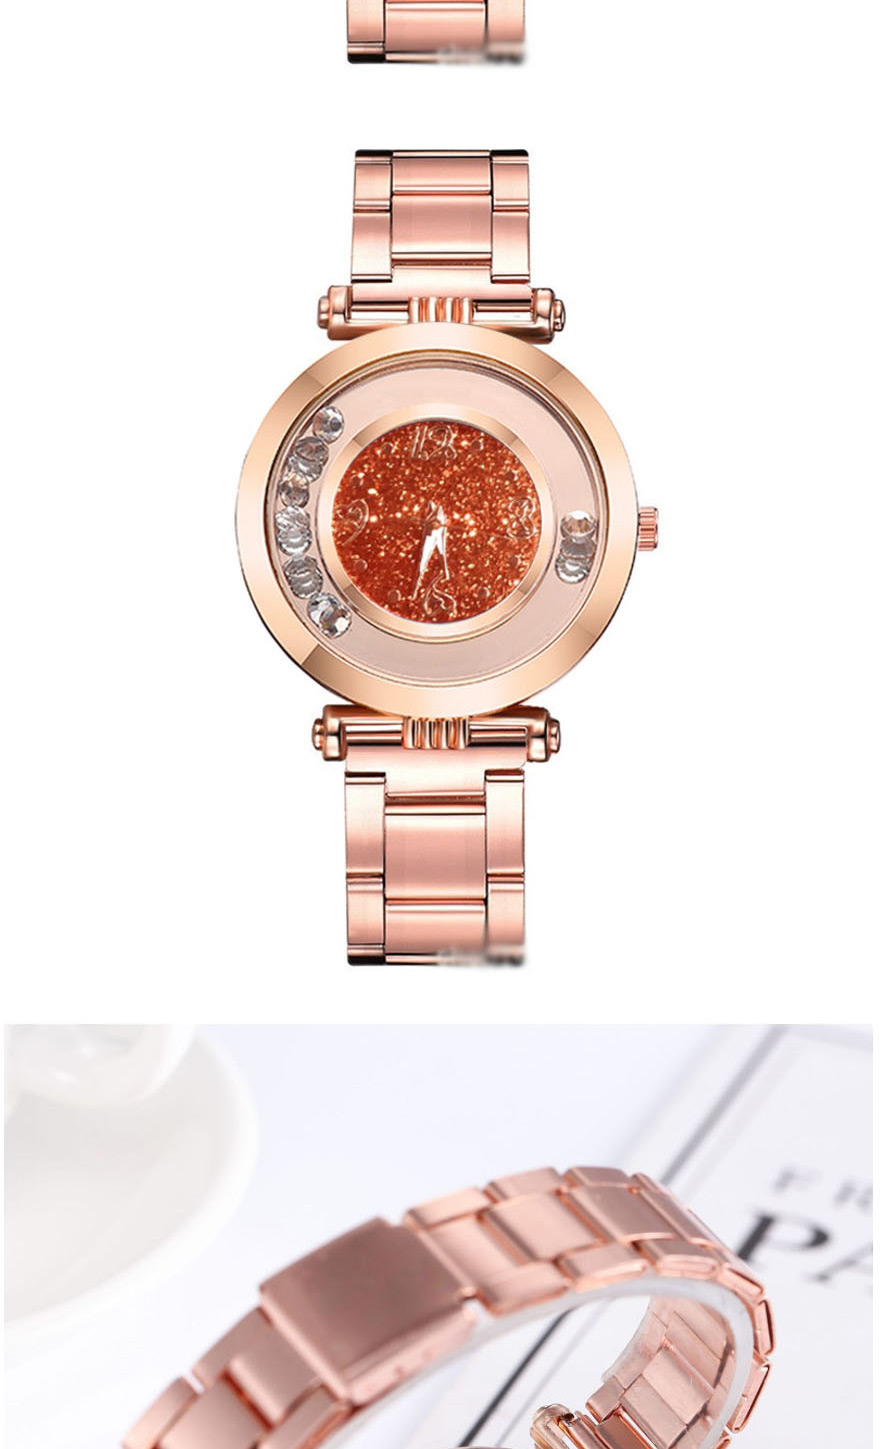 Fashion Black Quartz Watch With Diamonds And Glitter,Ladies Watches